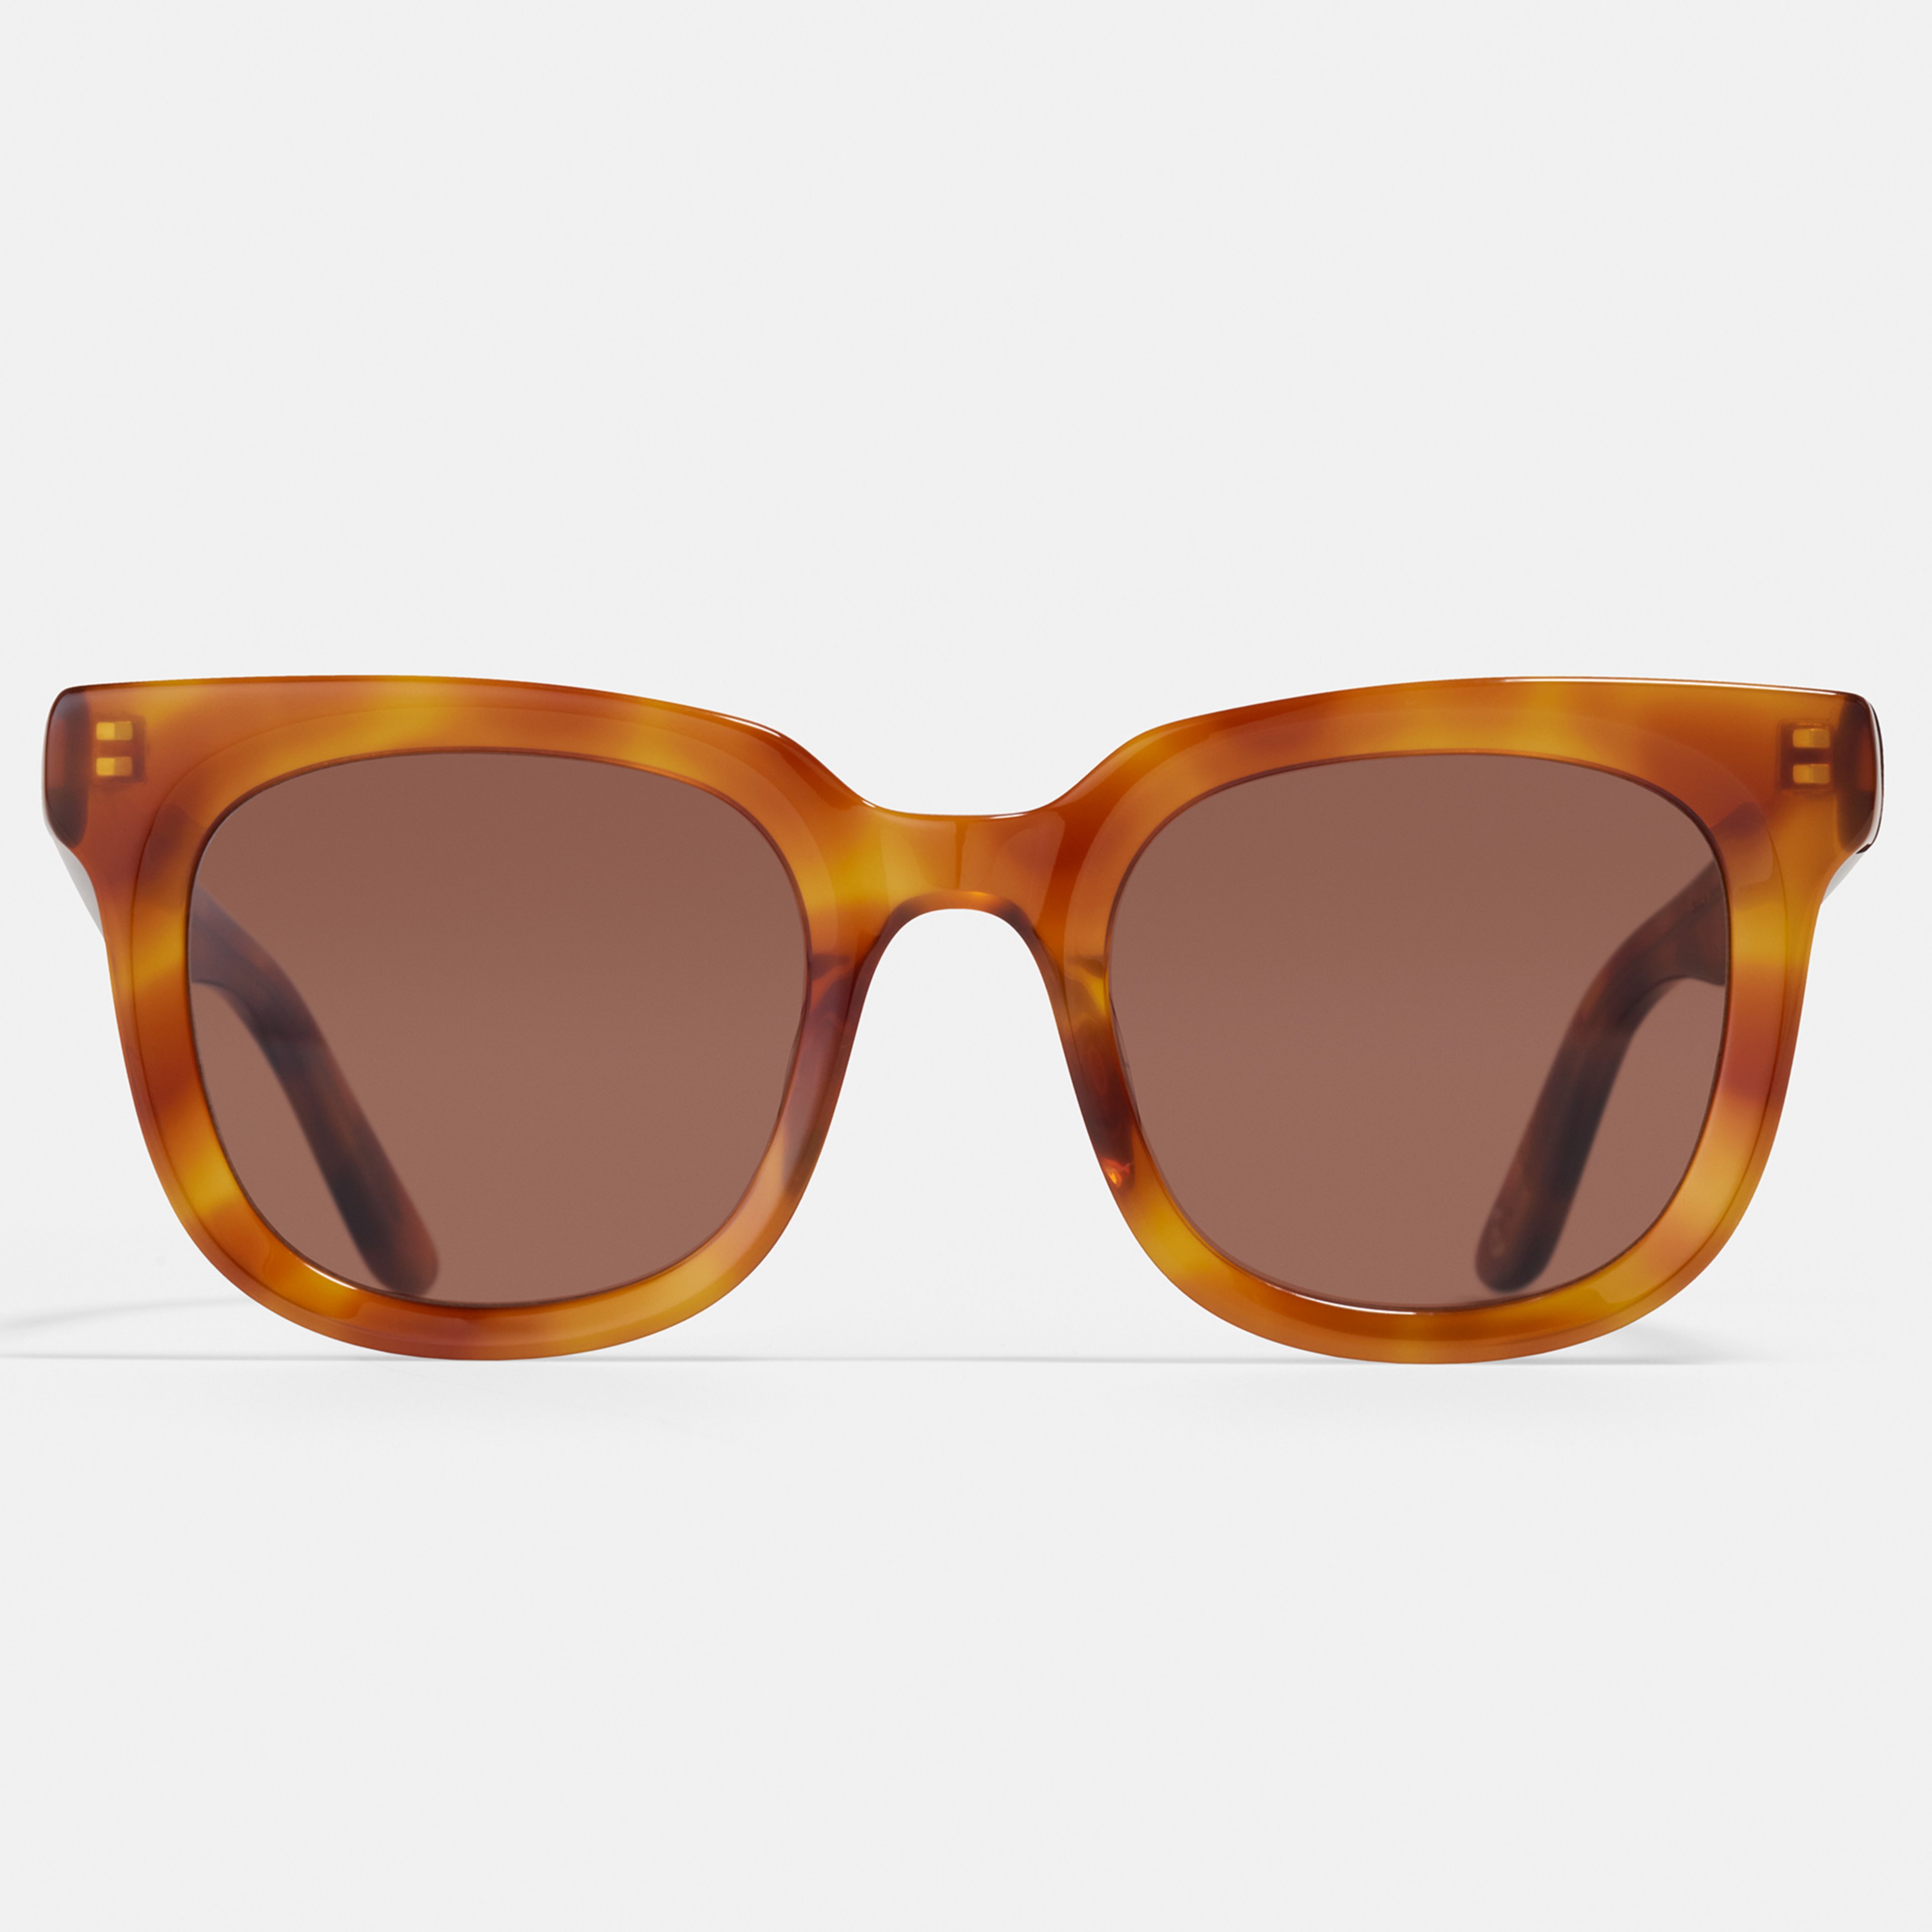 Ace & Tate Sunglasses | Round Bio acetate in Brown